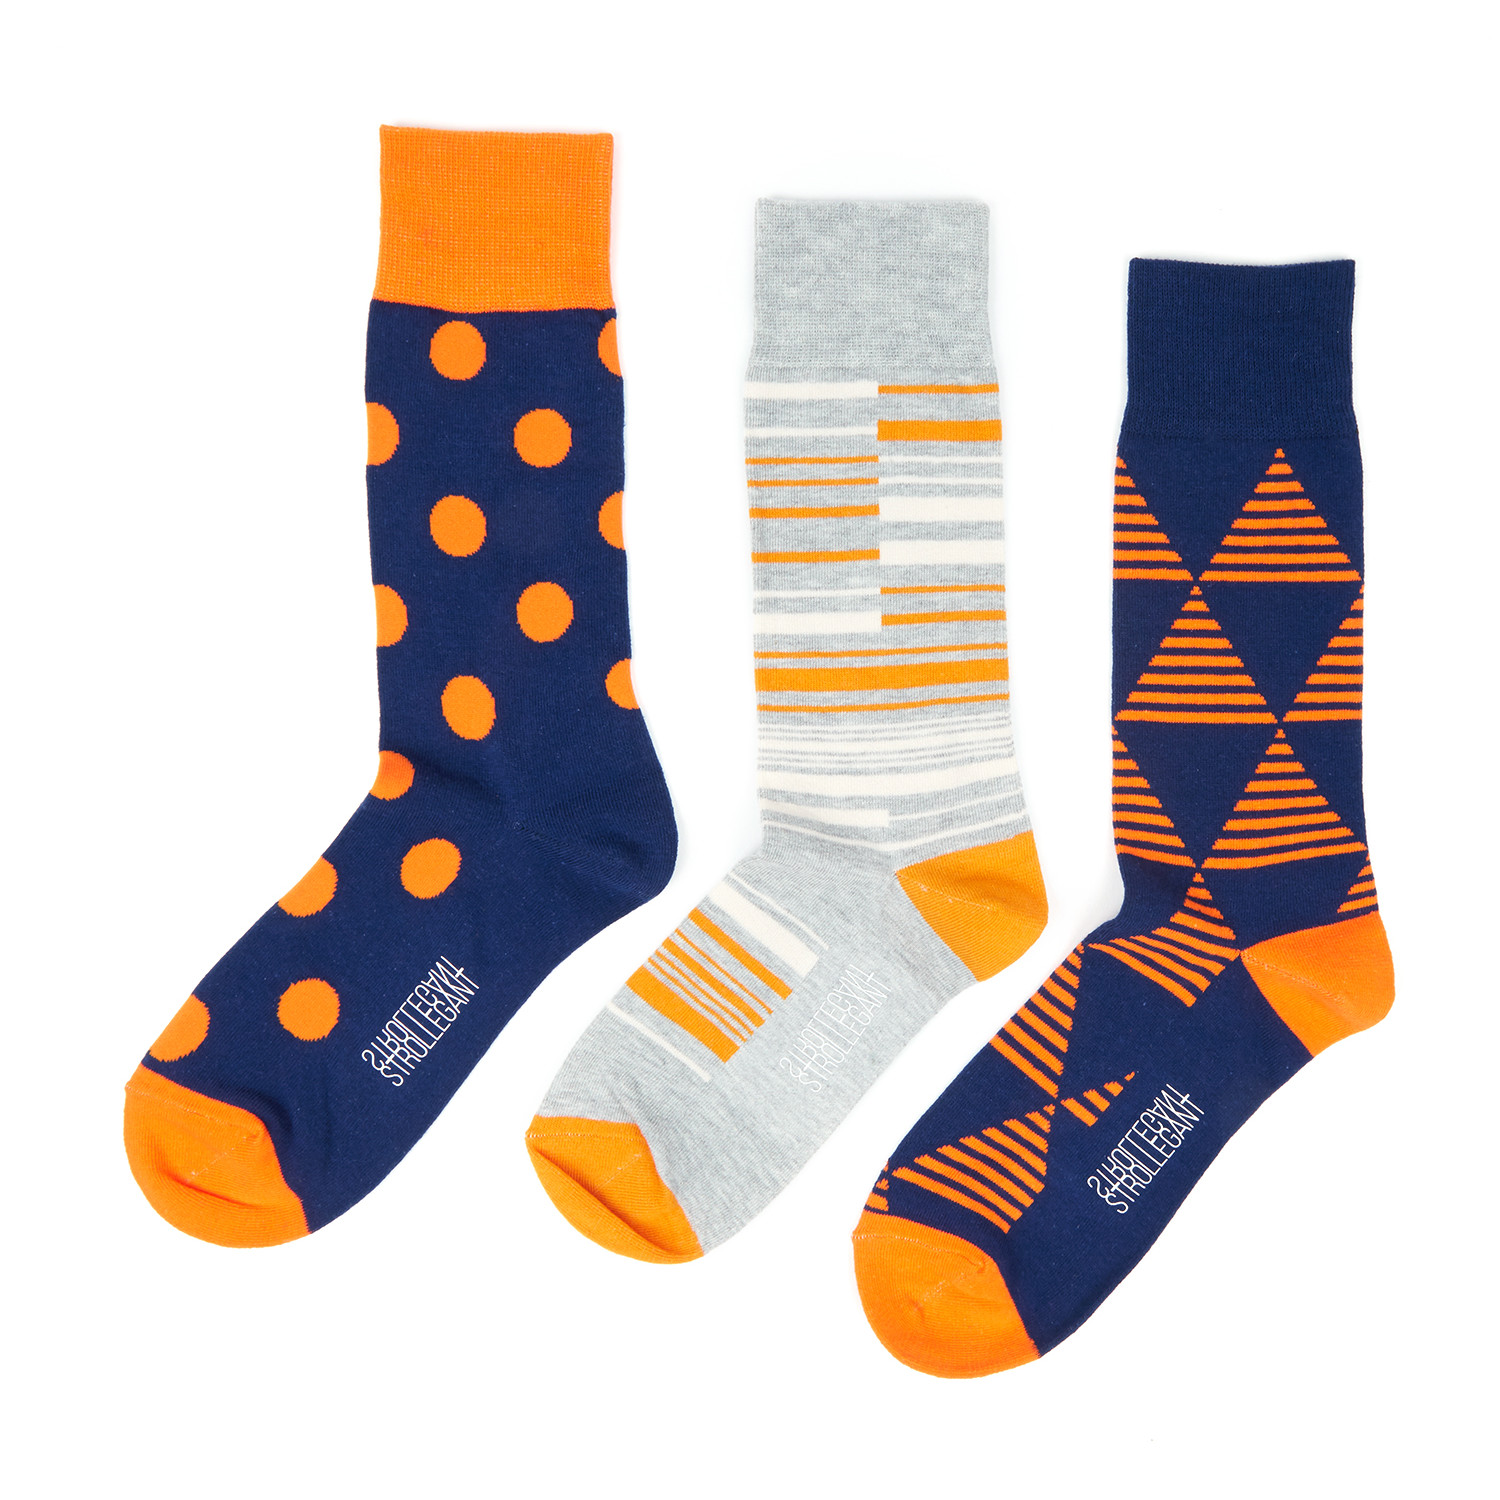 Top Floor Executive Socks // Pack of 3 - Strollegant Socks - Touch of ...